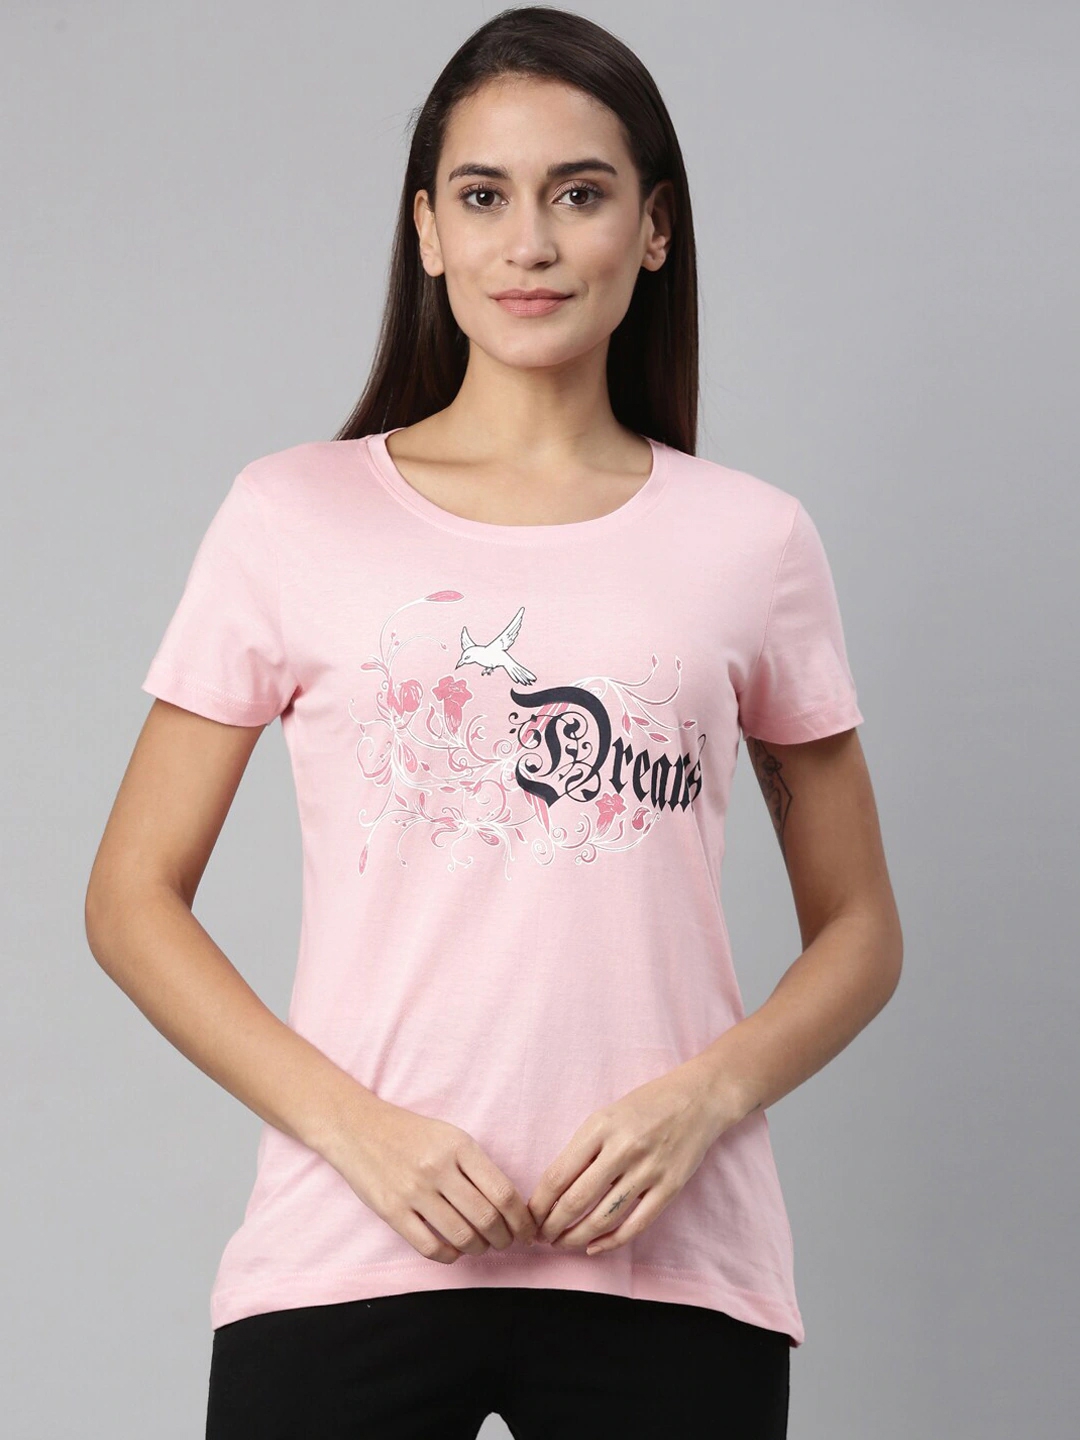 Kryptic | Women's Pink Cotton Printed T-Shirts 4